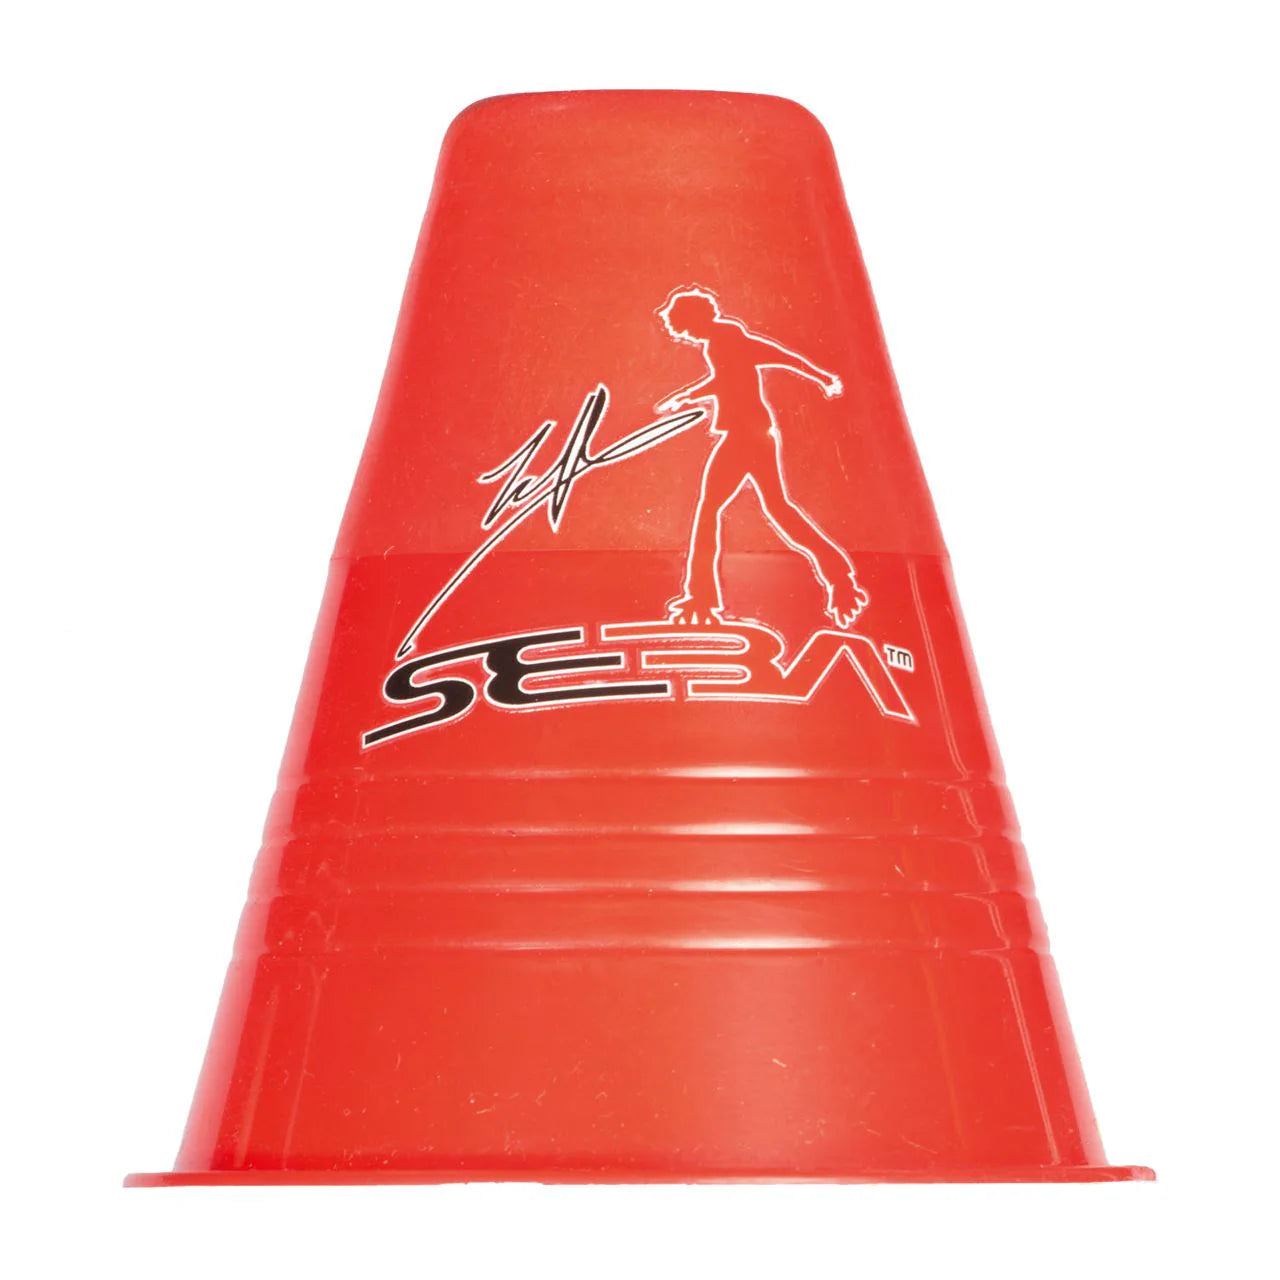 Seba Dual Density Freestyle Slalom Cones - Red